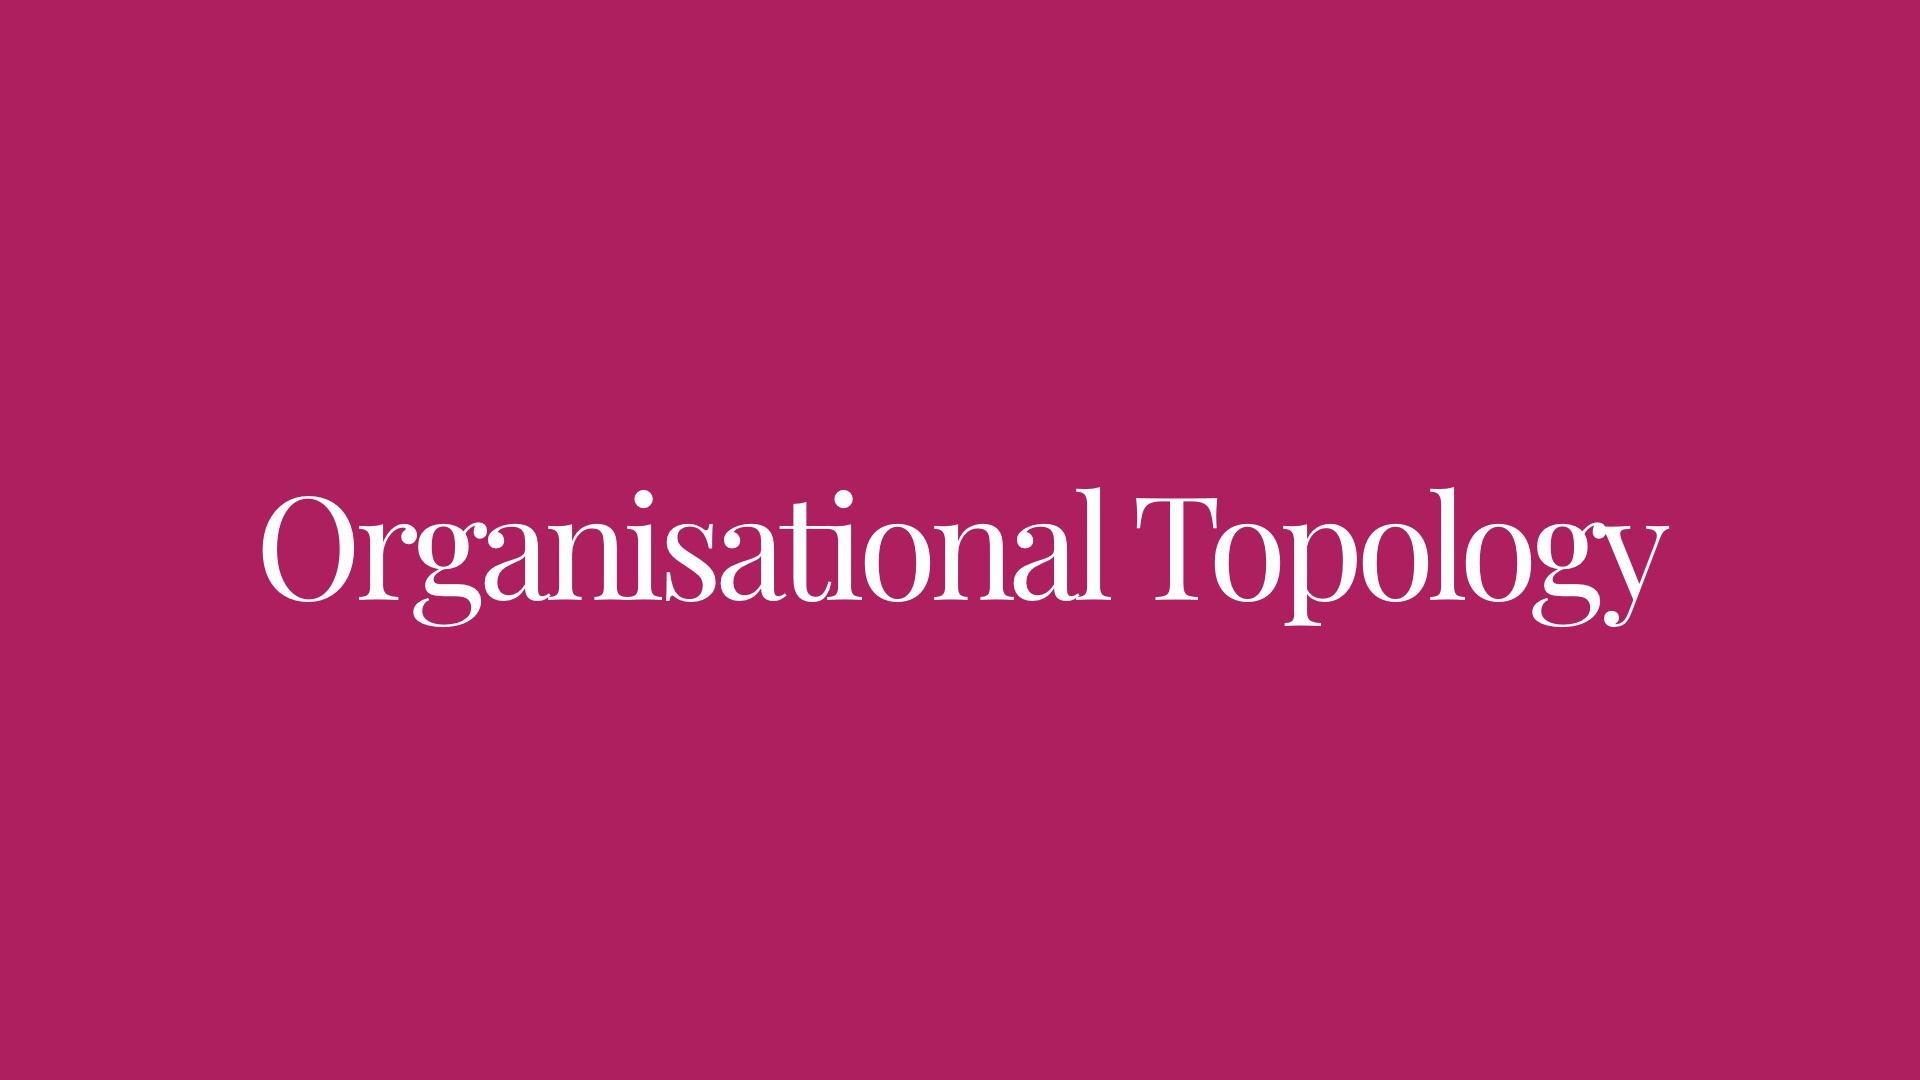 Organisational Topology